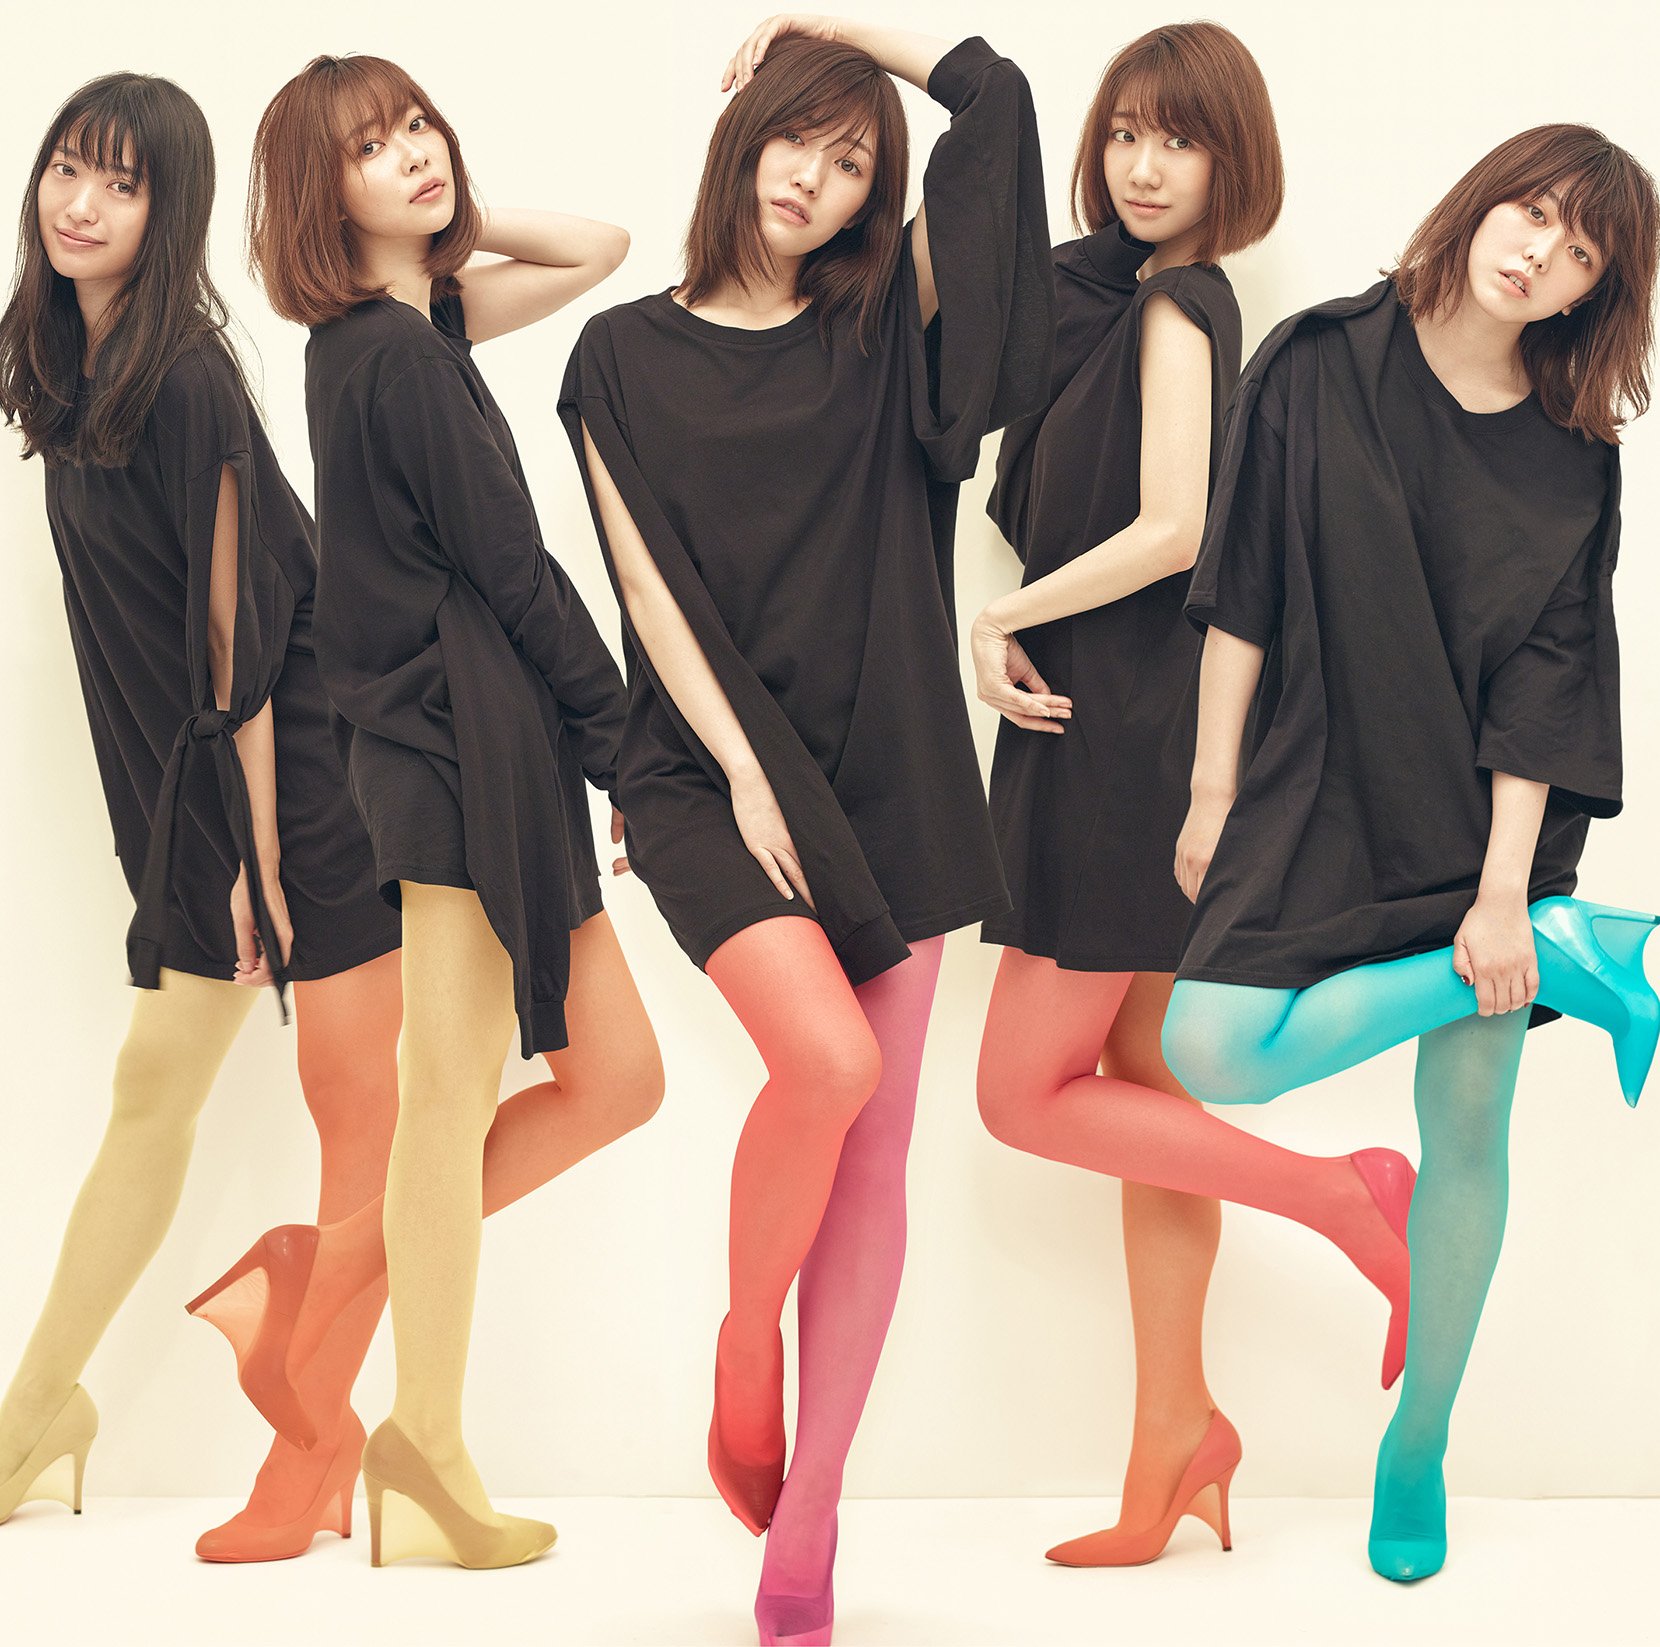 AKB48 — 11gatsu no Anklet cover artwork